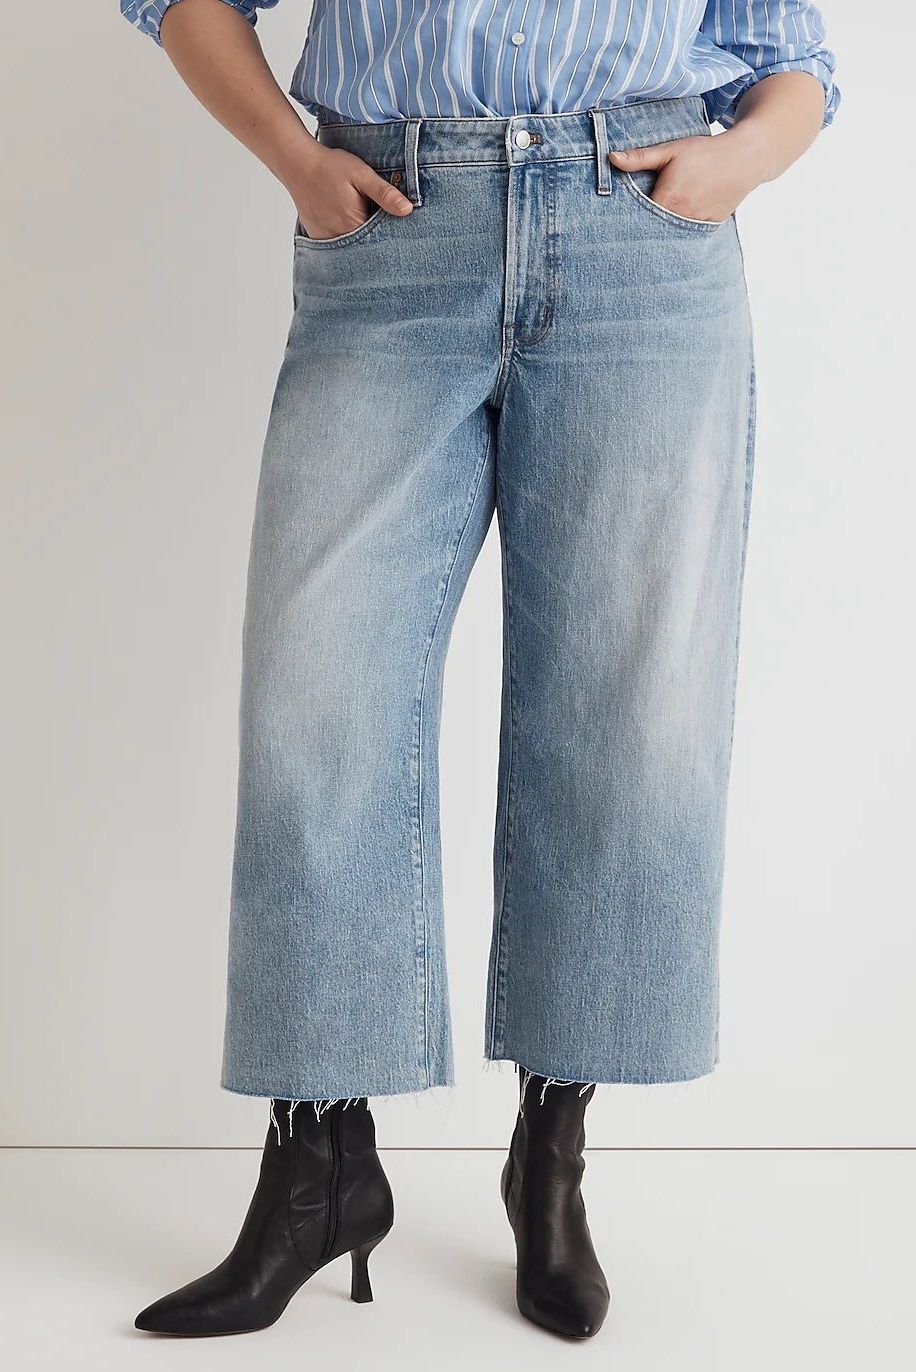 Vividspark Fashion Blog — High-Waist Wide-Leg Jeans